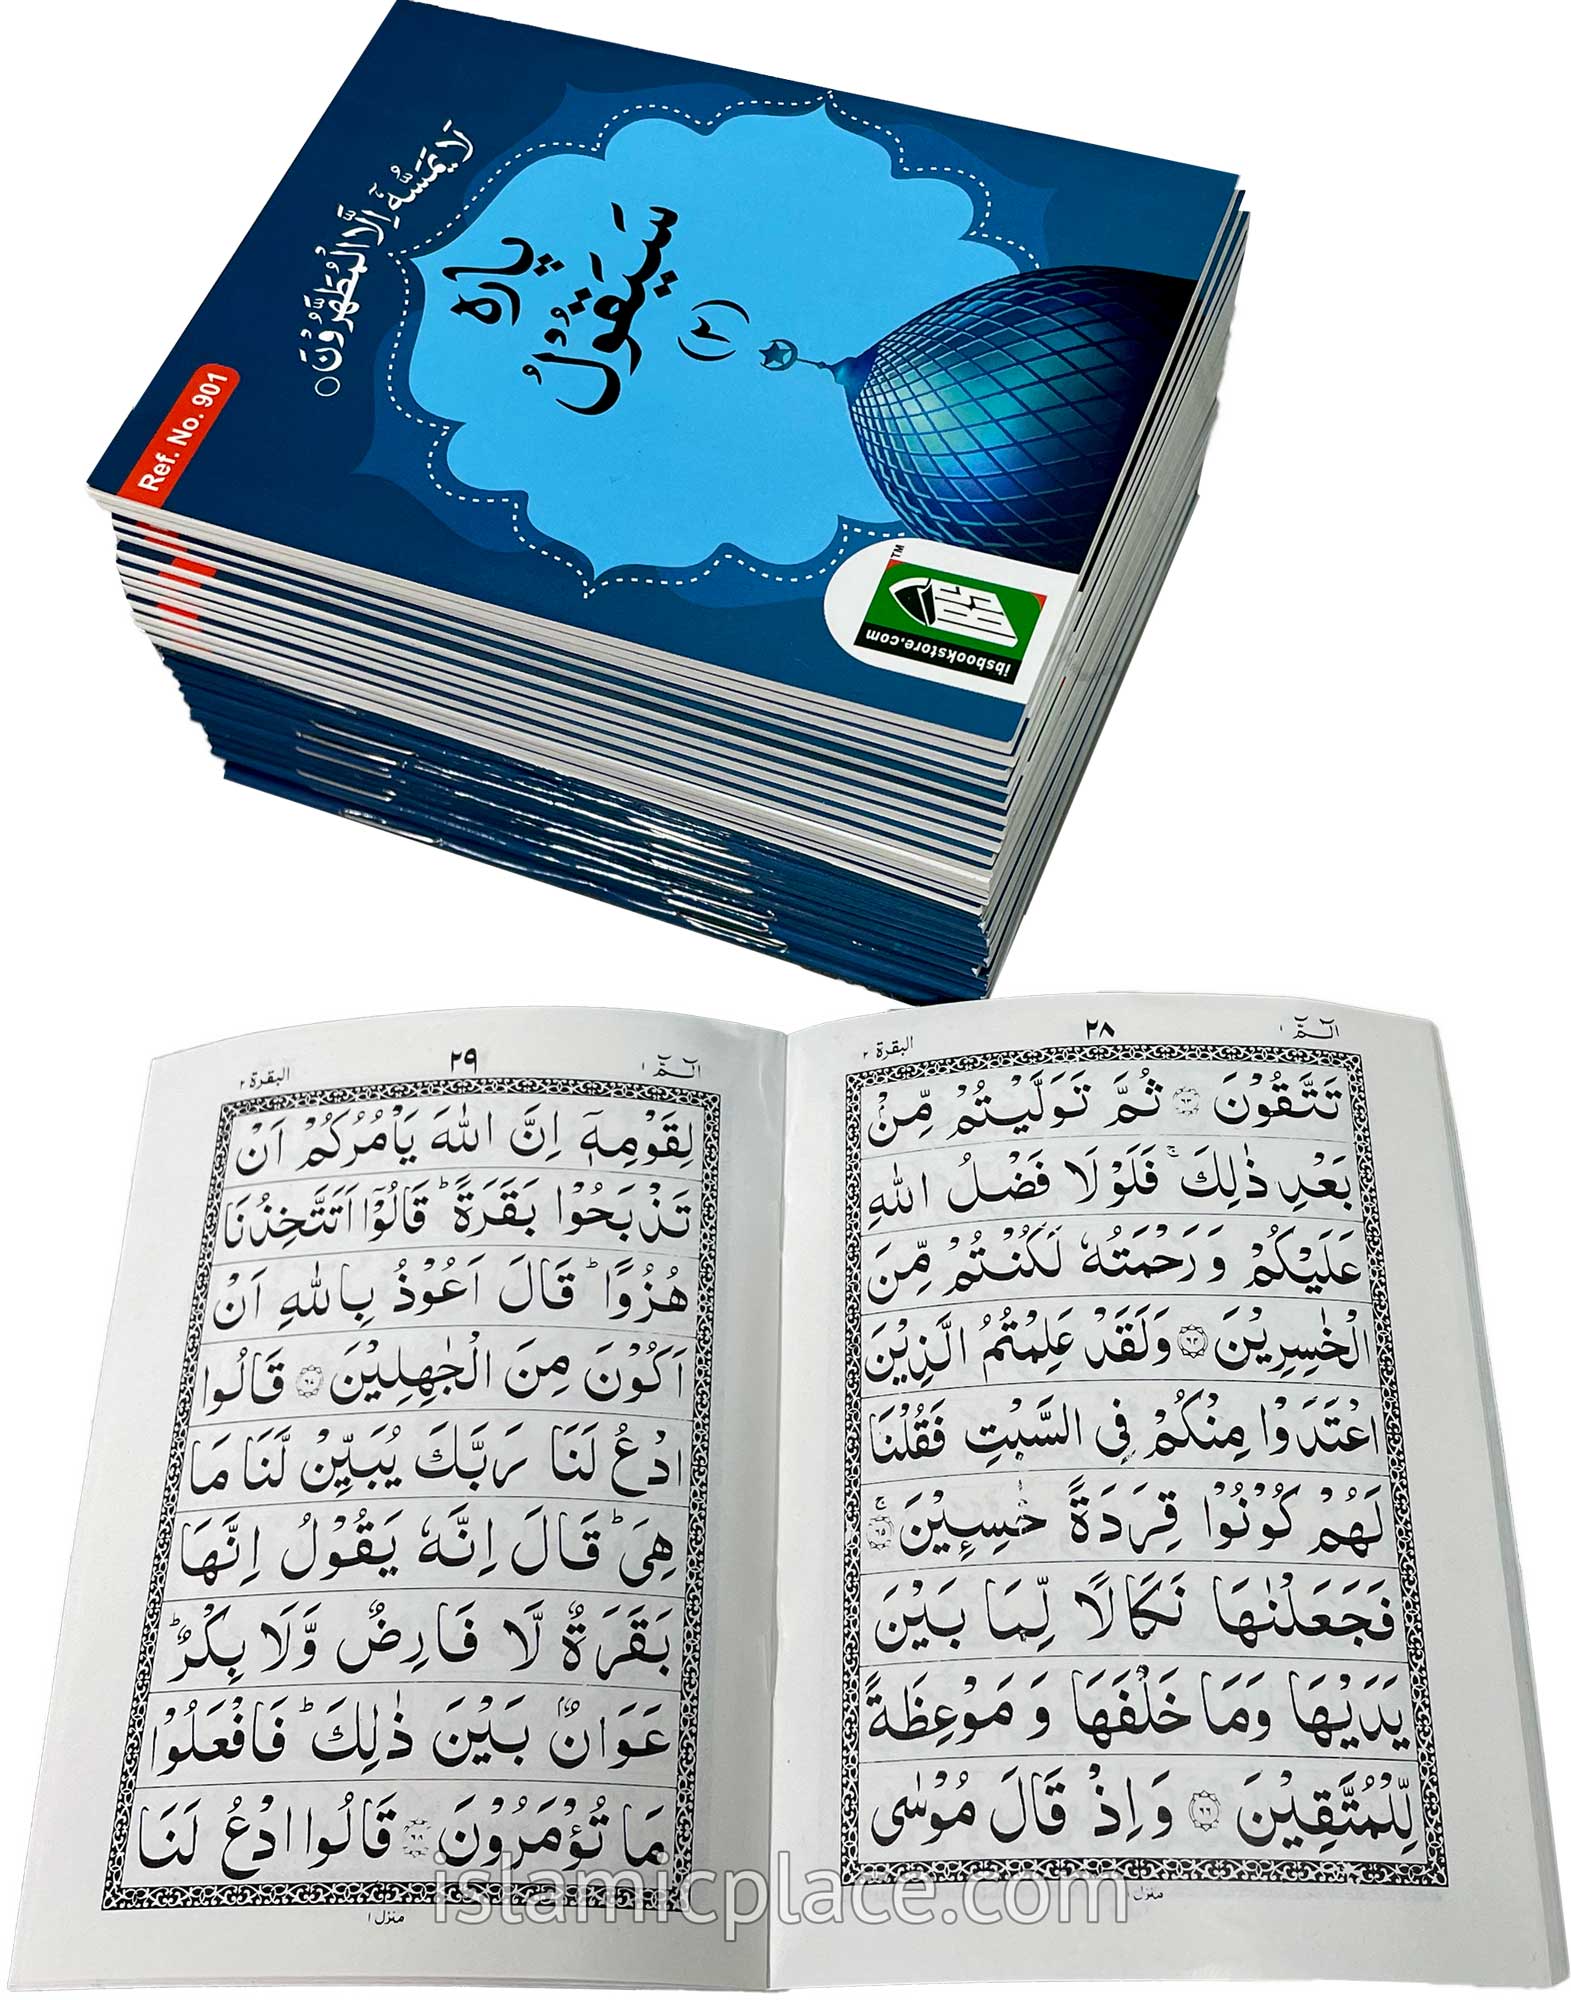 [30 vol set] Arabic: Quran Mushaf IndoPak Persian script 30 Part set (3.5" x 5")   Paperback in Velcro Case (Ref# 901-1/30) 9 line